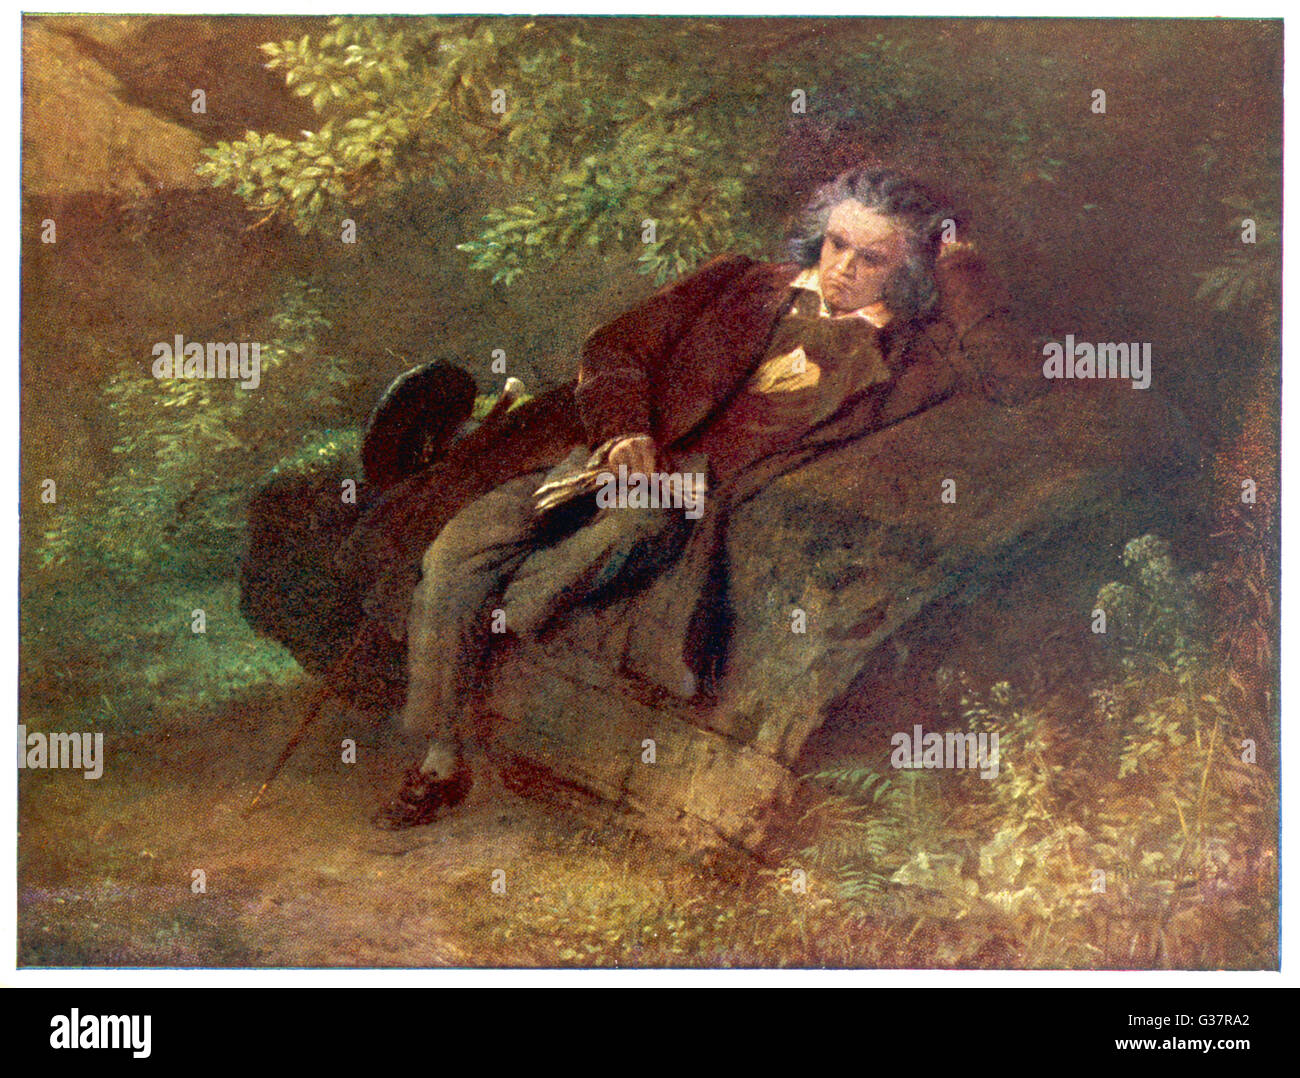 LUDWIG VAN BEETHOVEN Beethoven assis dans certains bois Date : 1770 - 1827 Banque D'Images